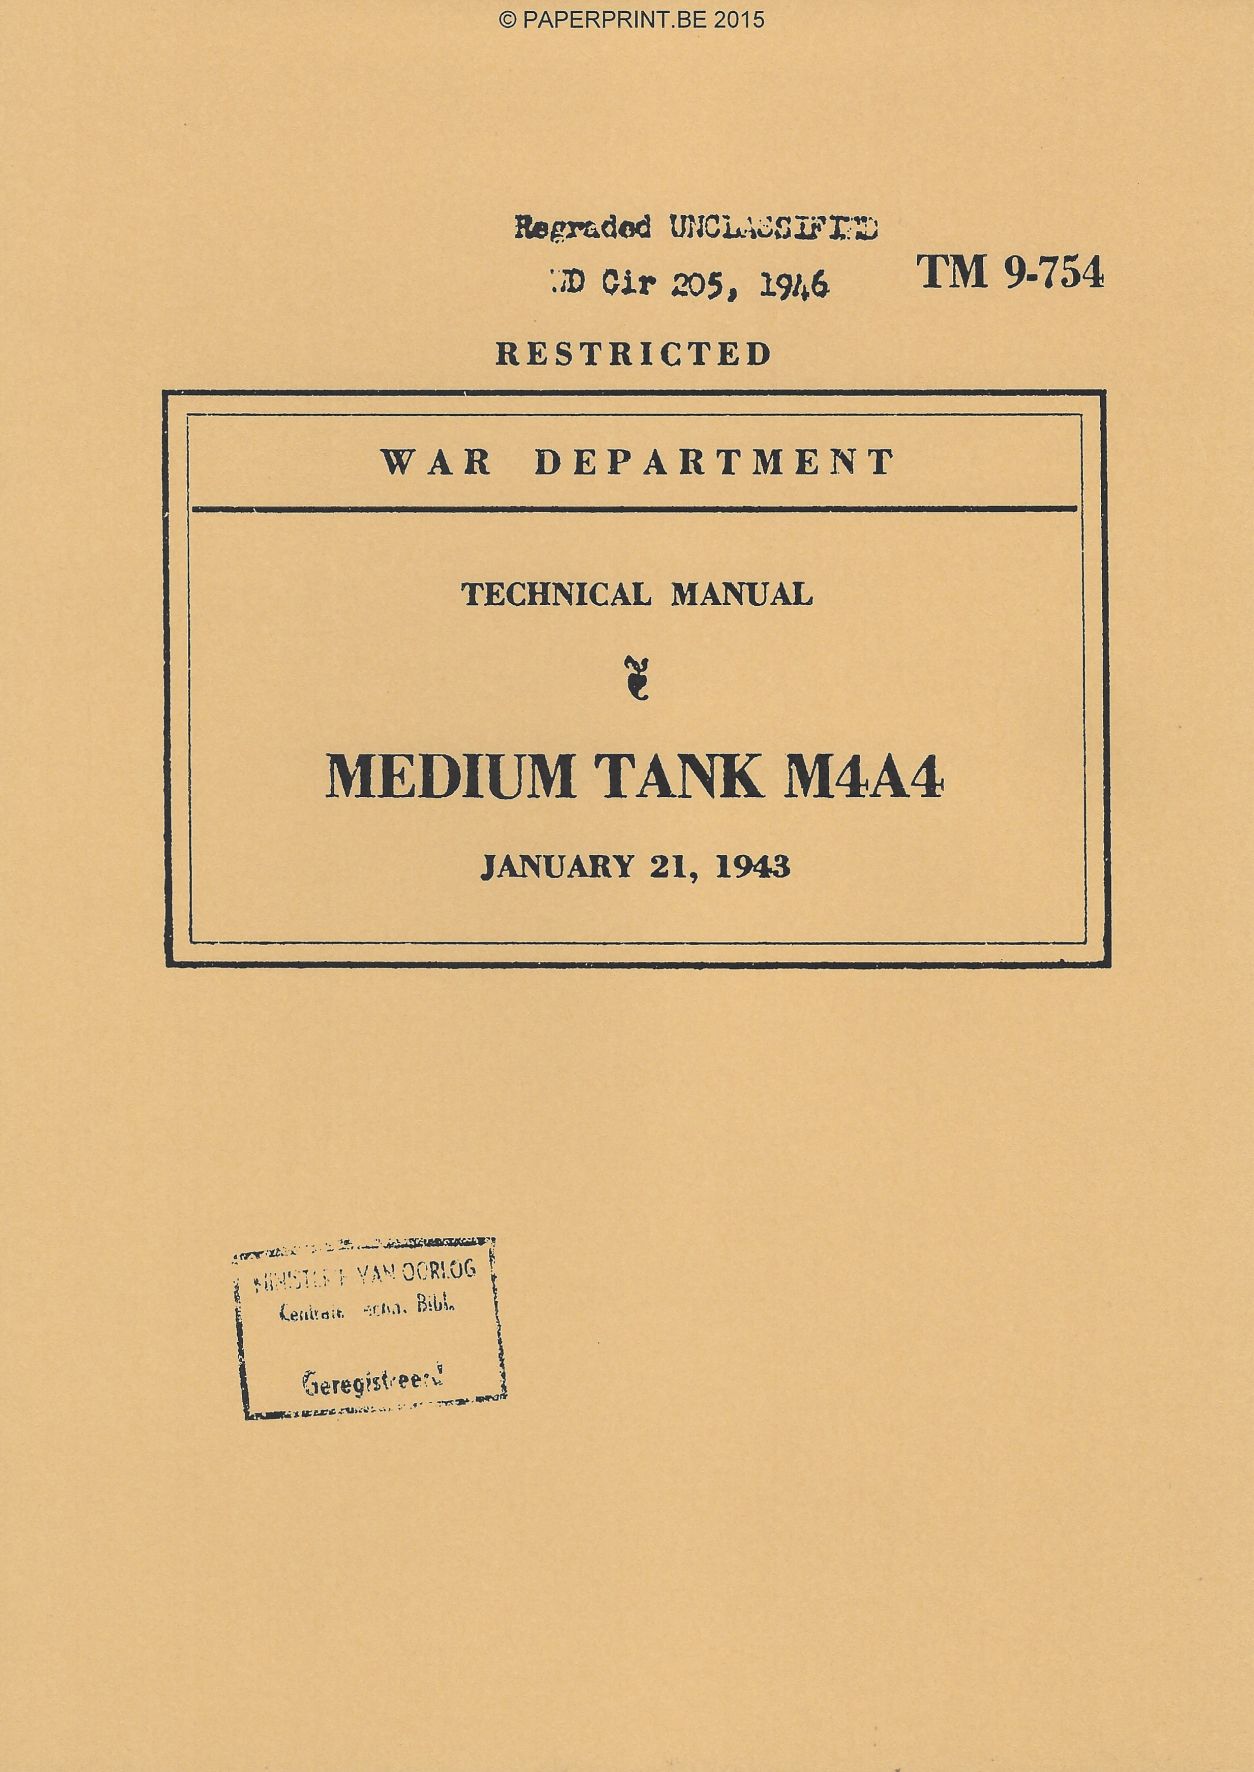 TM 9-754 US MEDIUM TANK M4A4